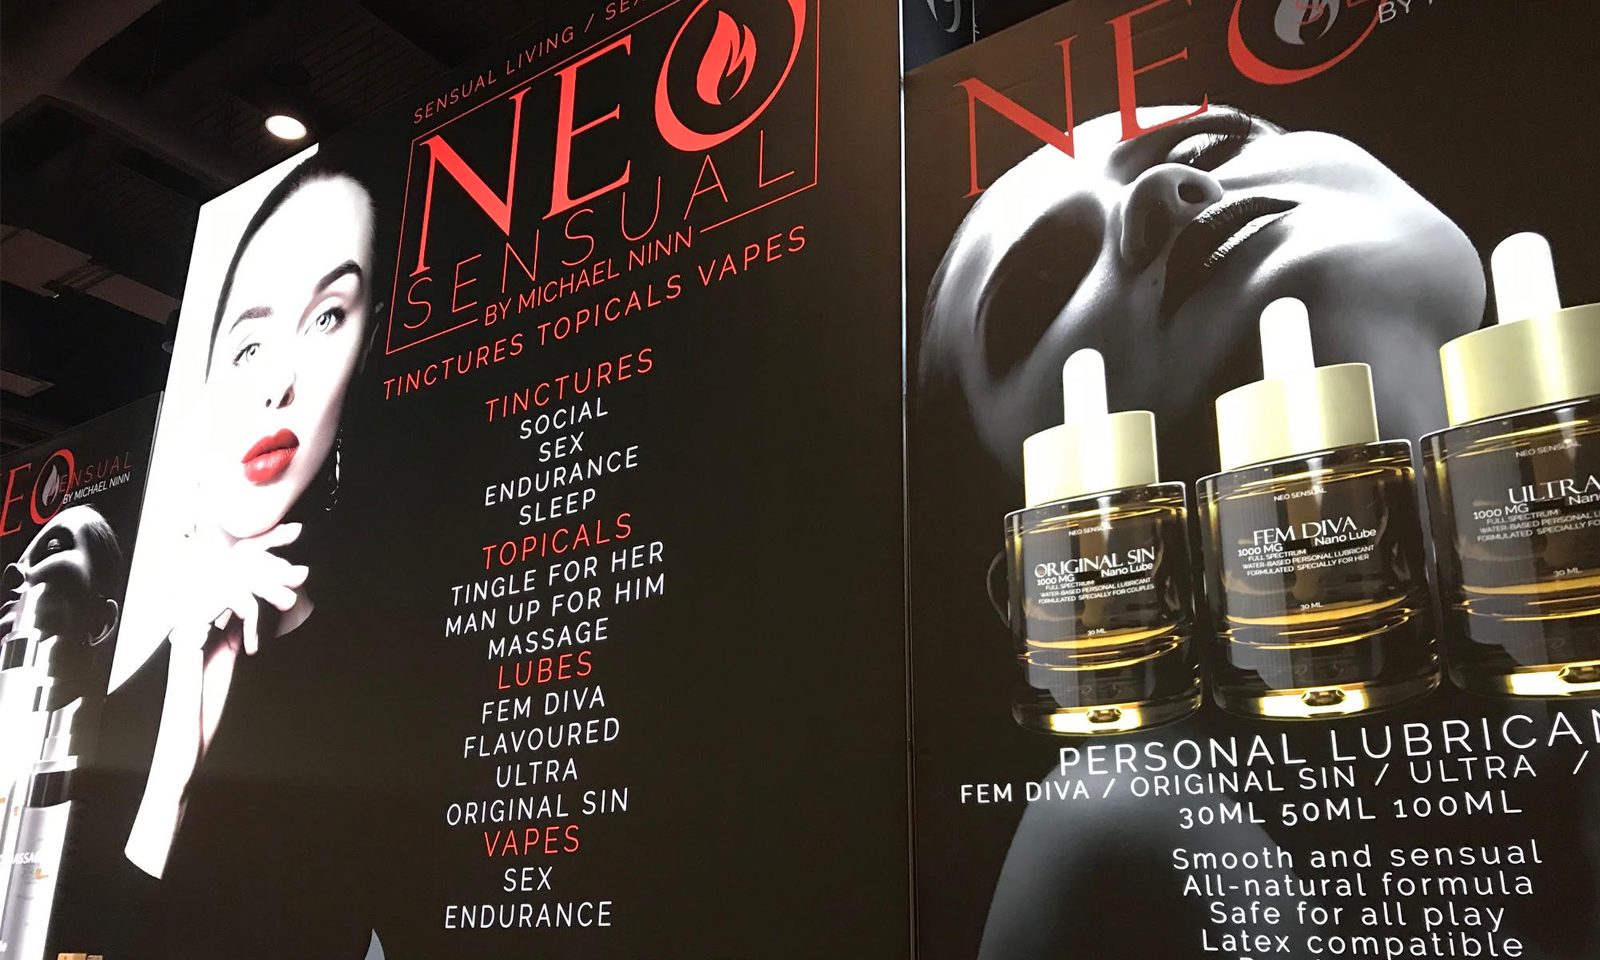 Michael Ninn’s NEO Sensual Line Makes ANE Debut